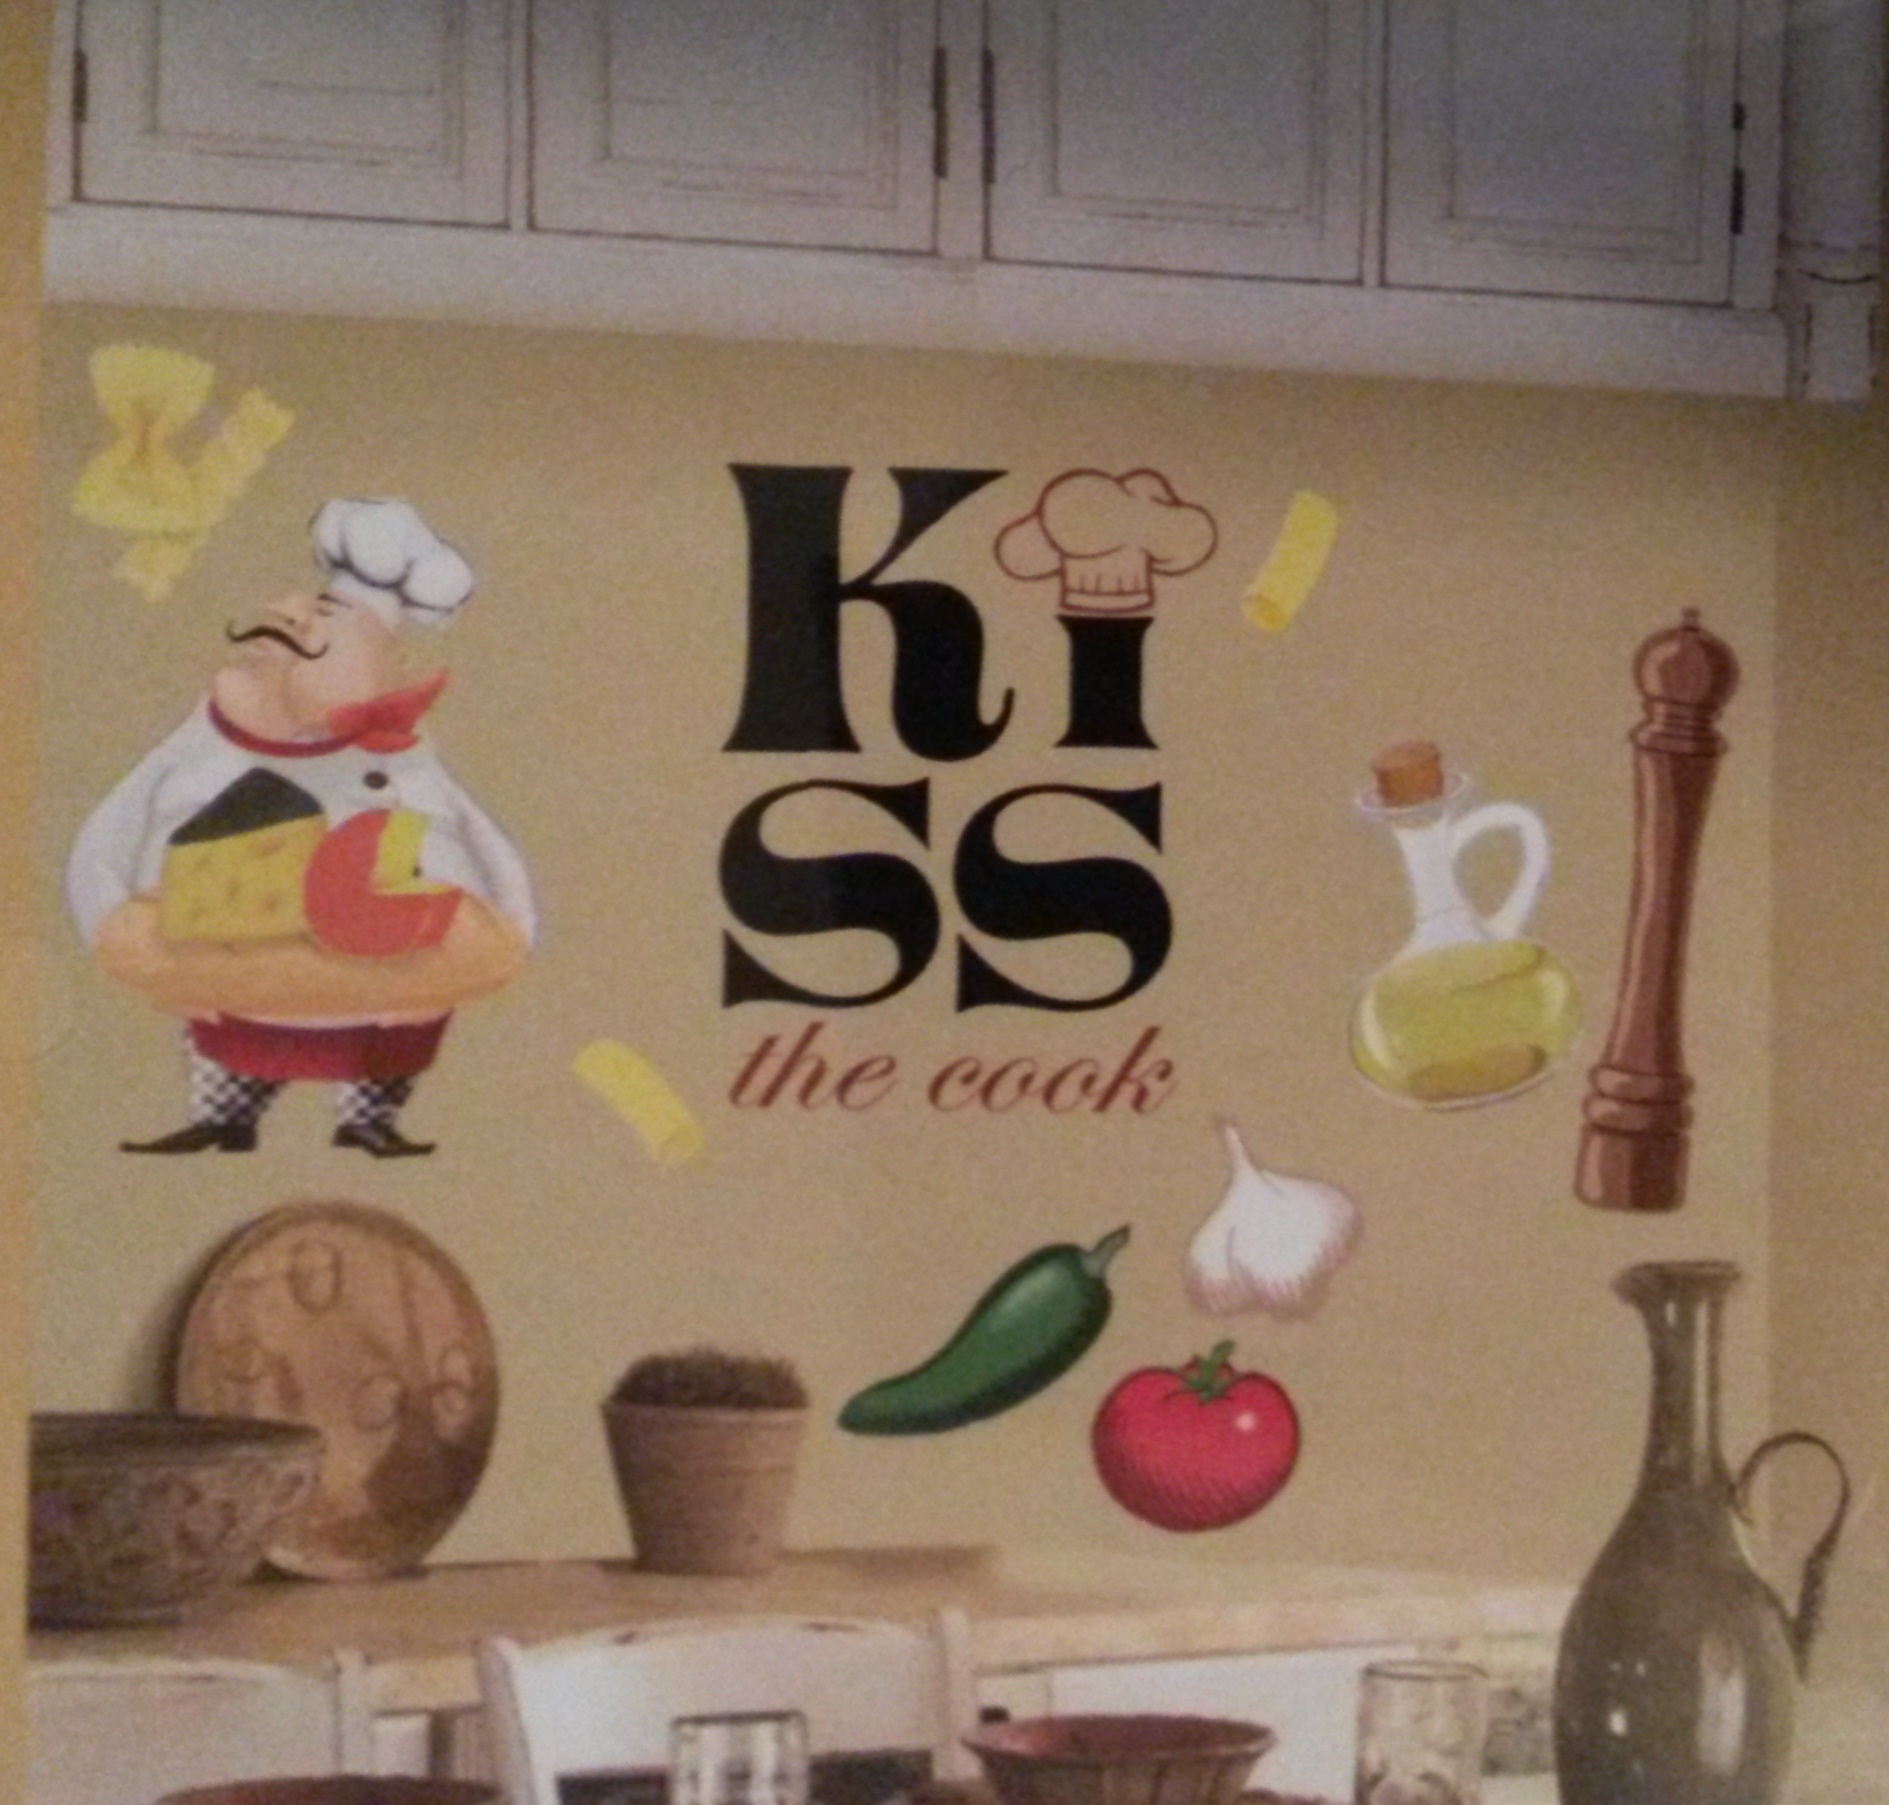 https://www.kitchengloss.com/images/FatChefDecals-KissTheCook-1.jpg